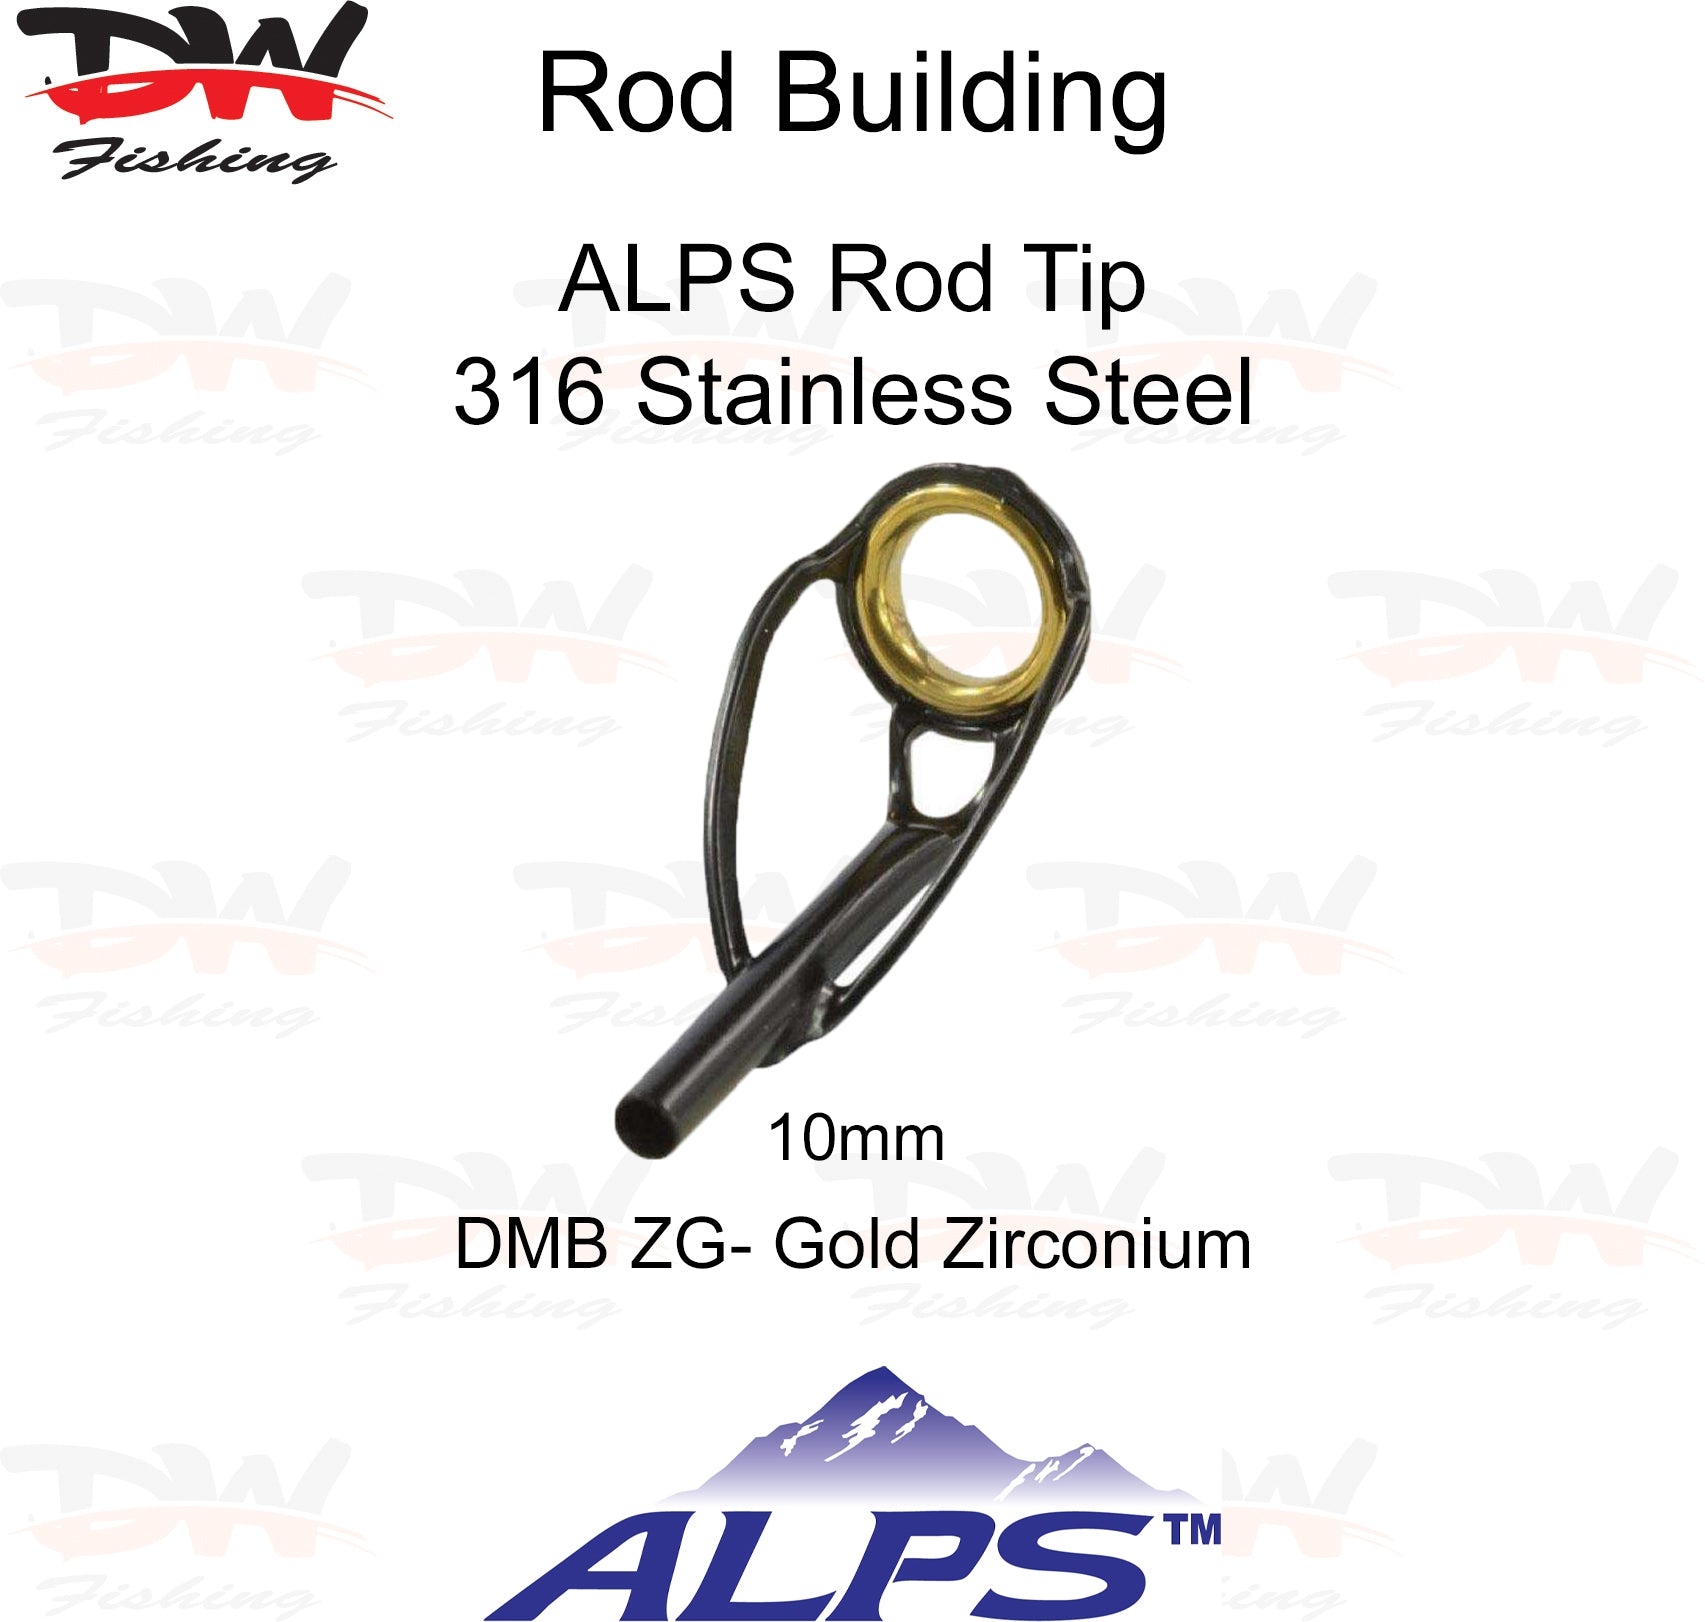 ALPS rod tip DMB-ZG Black frame with gold zirconium ring size 10 rod tip